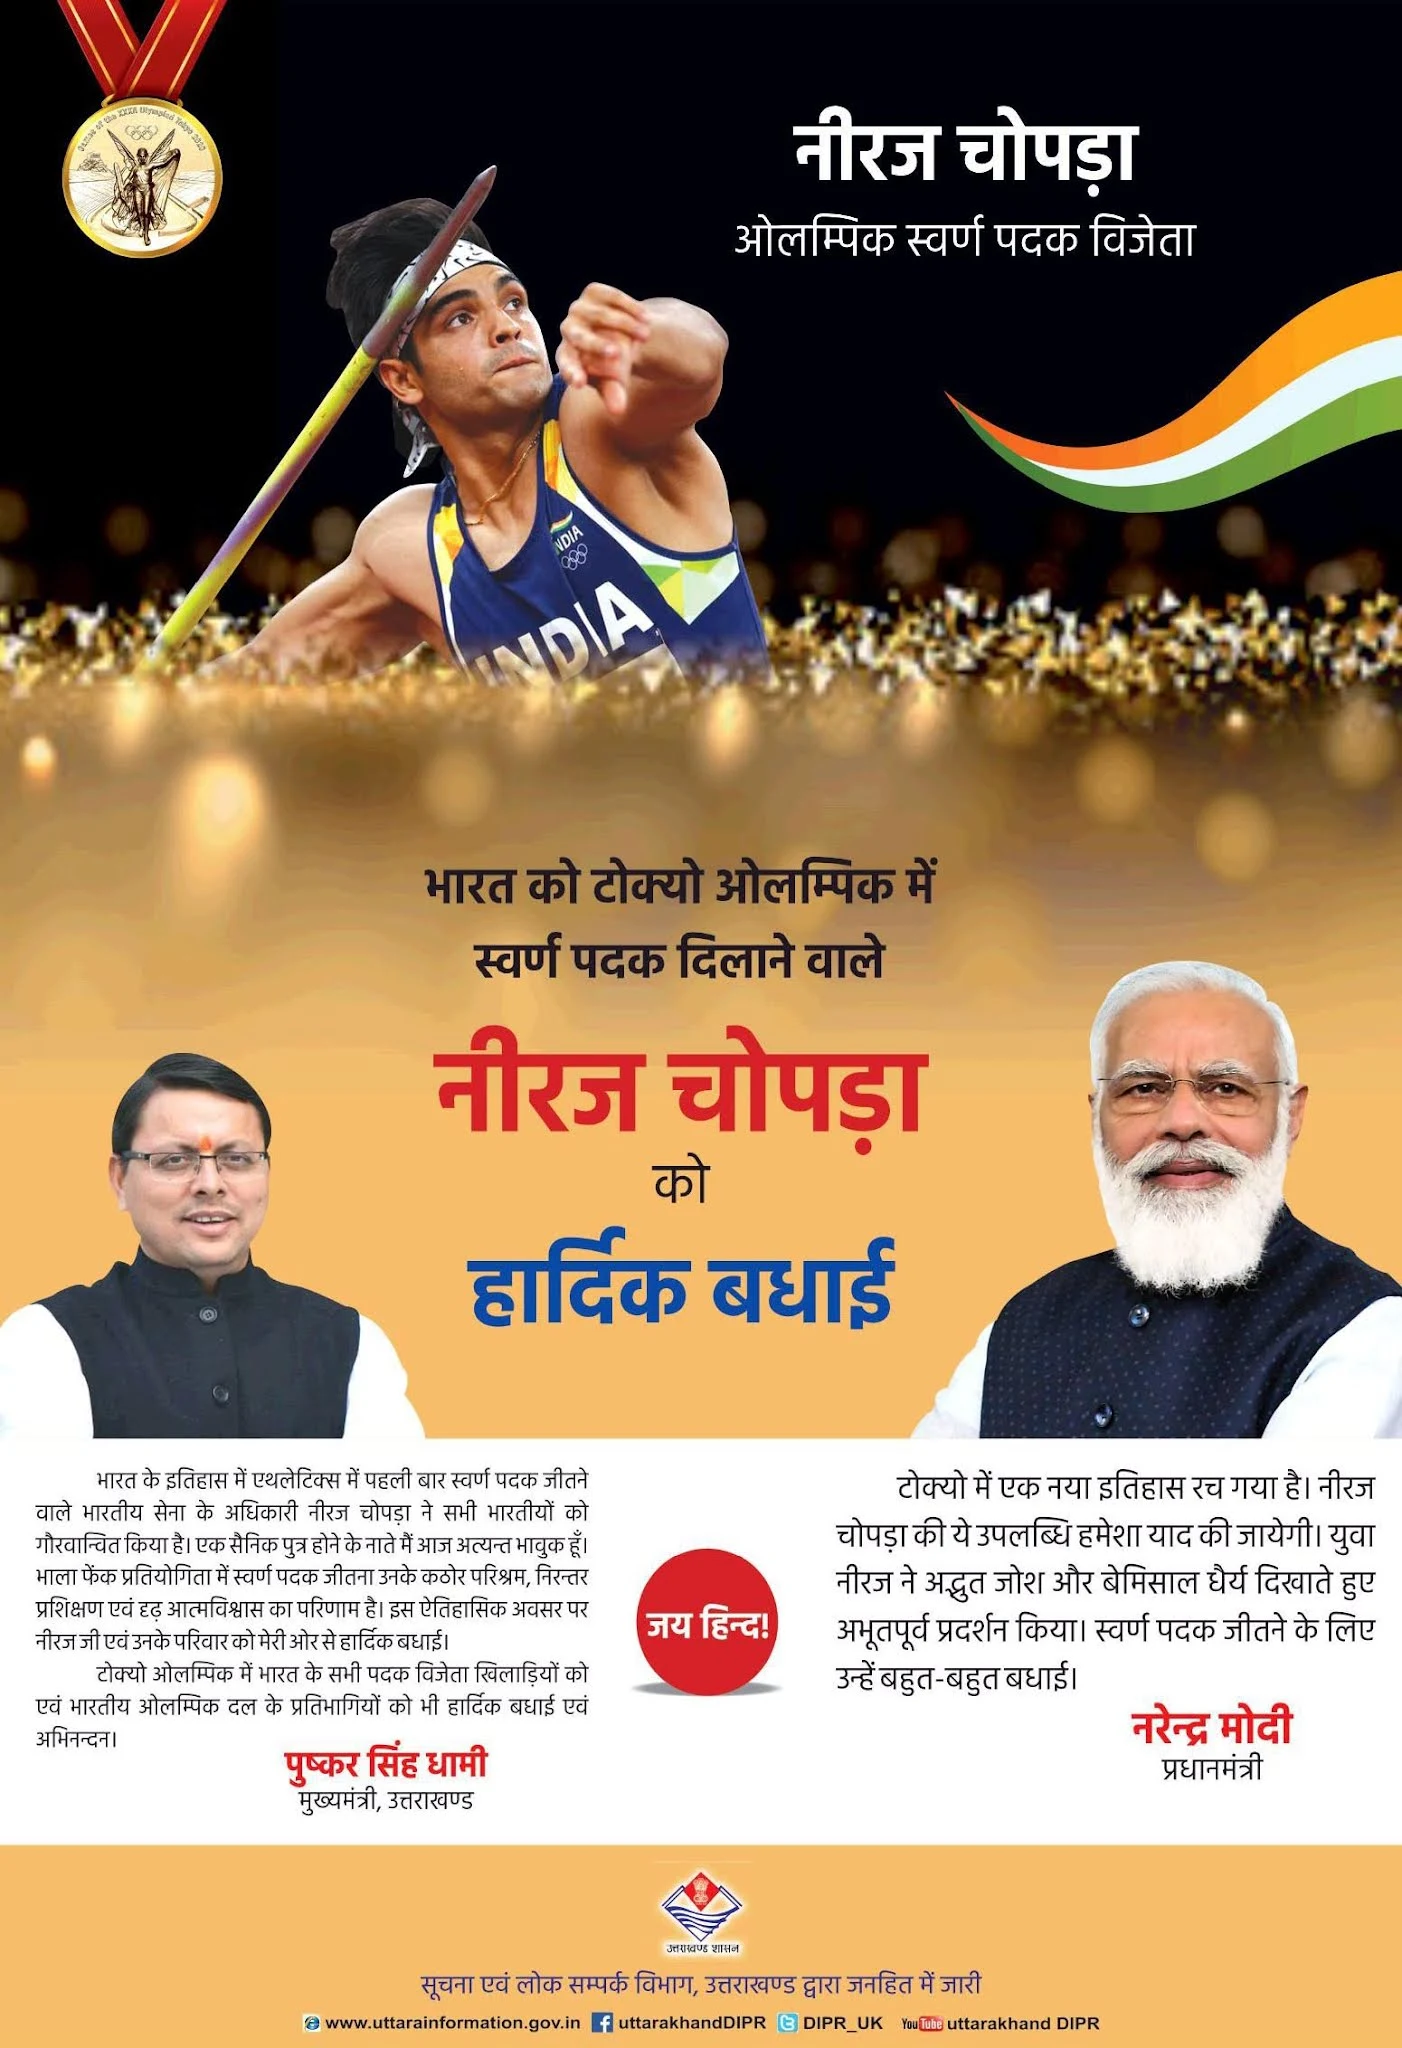 #1 Uttrakhand Govt Congratulating Neeraj Chopra on winning